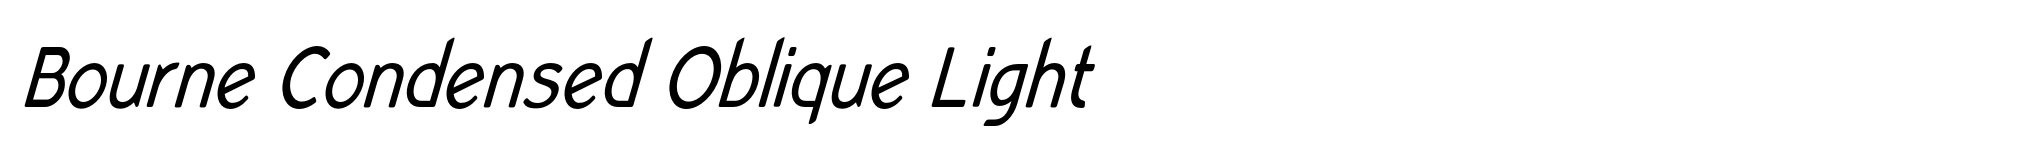 Bourne Condensed Oblique Light image